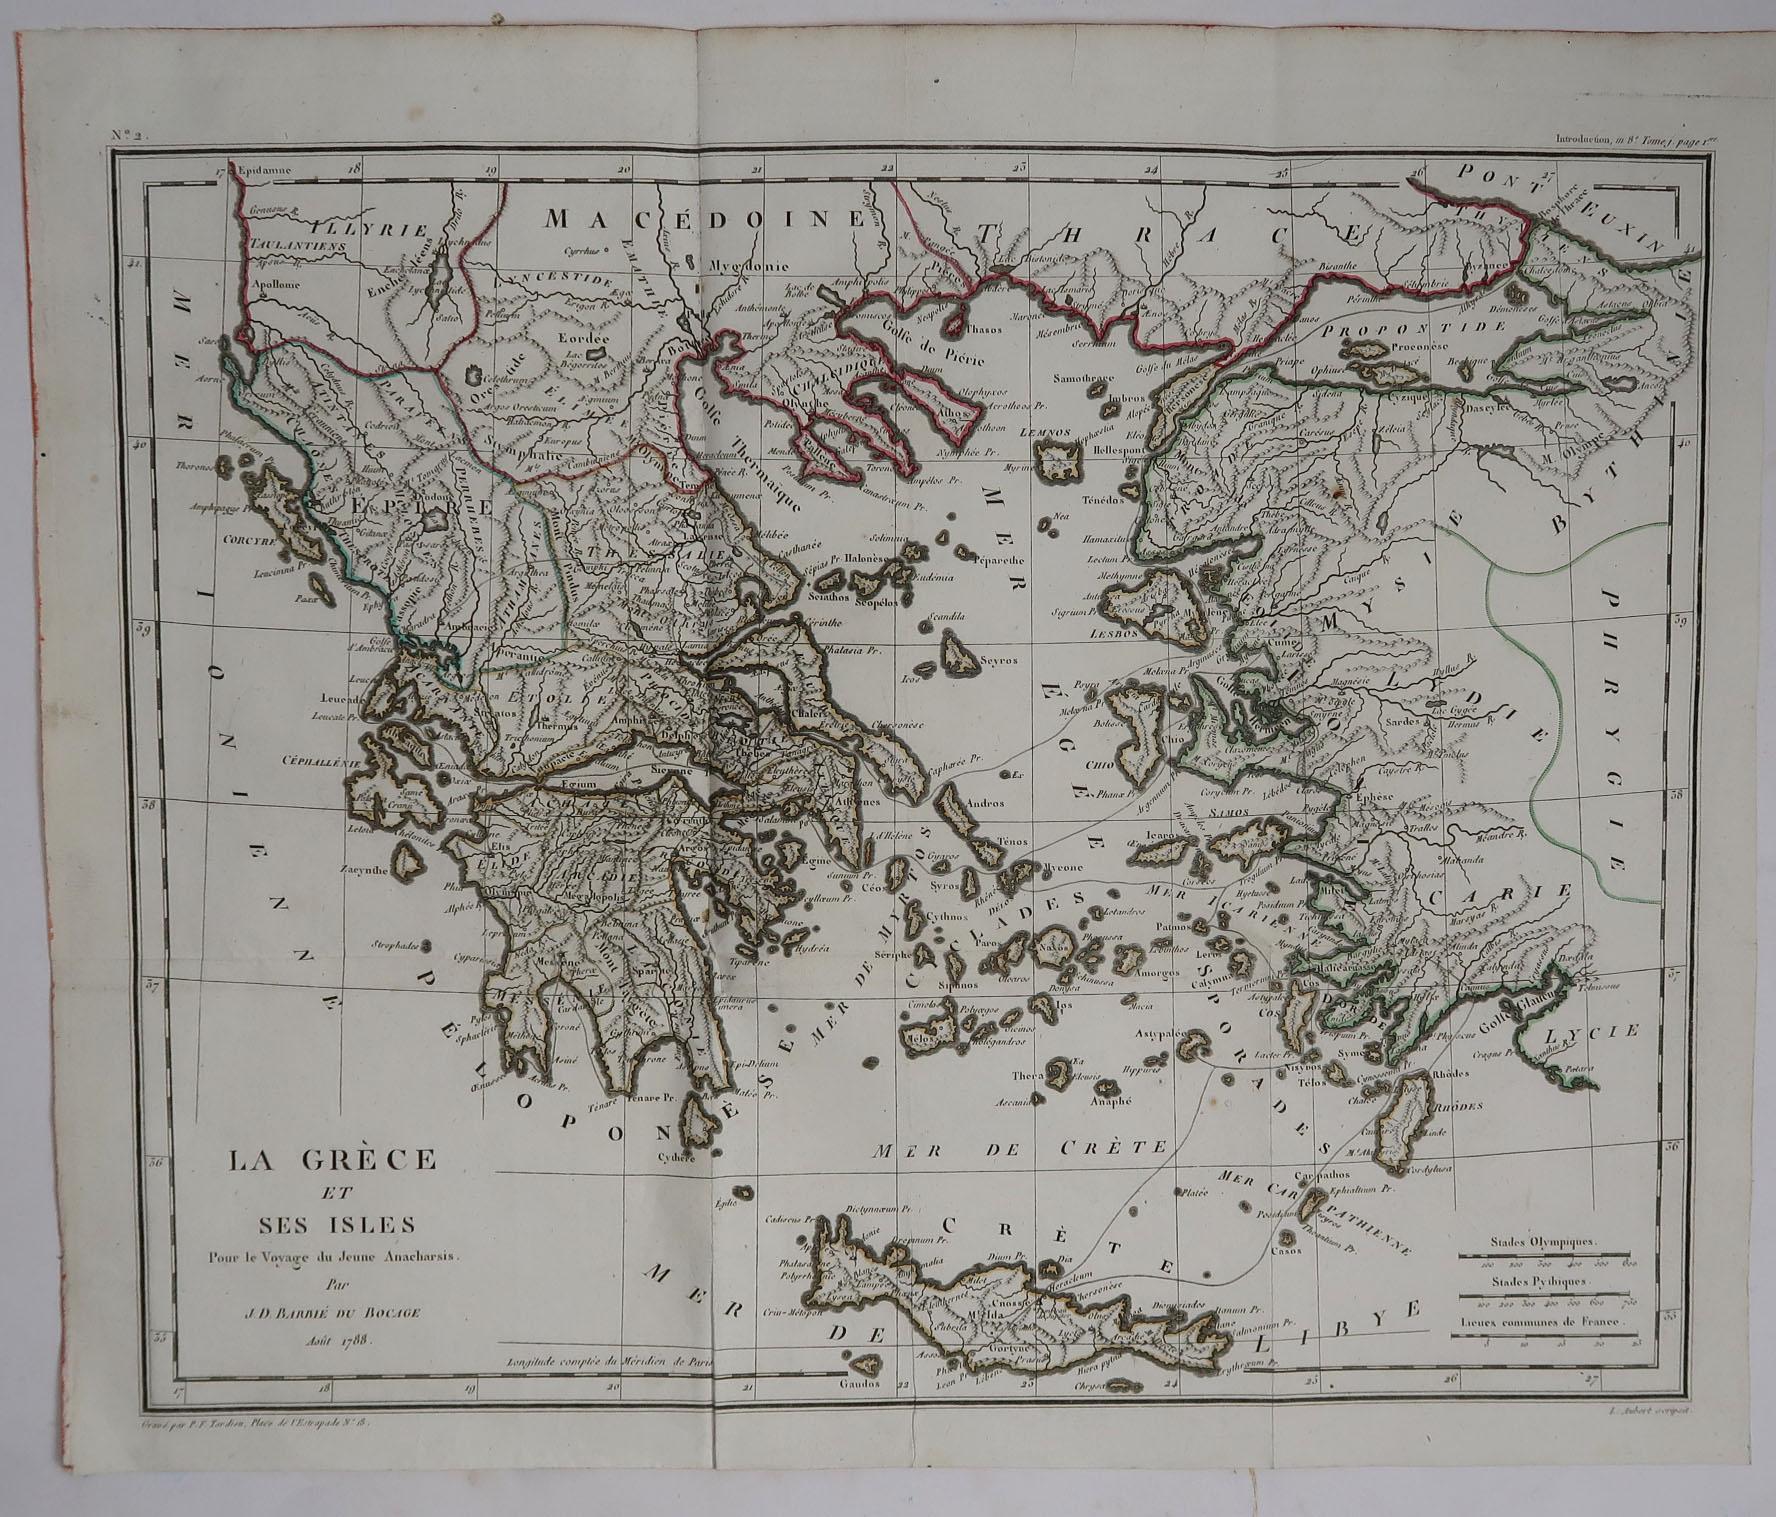 Other Original Antique Map of Ancient Greece by Barbie Du Bocage, 1788